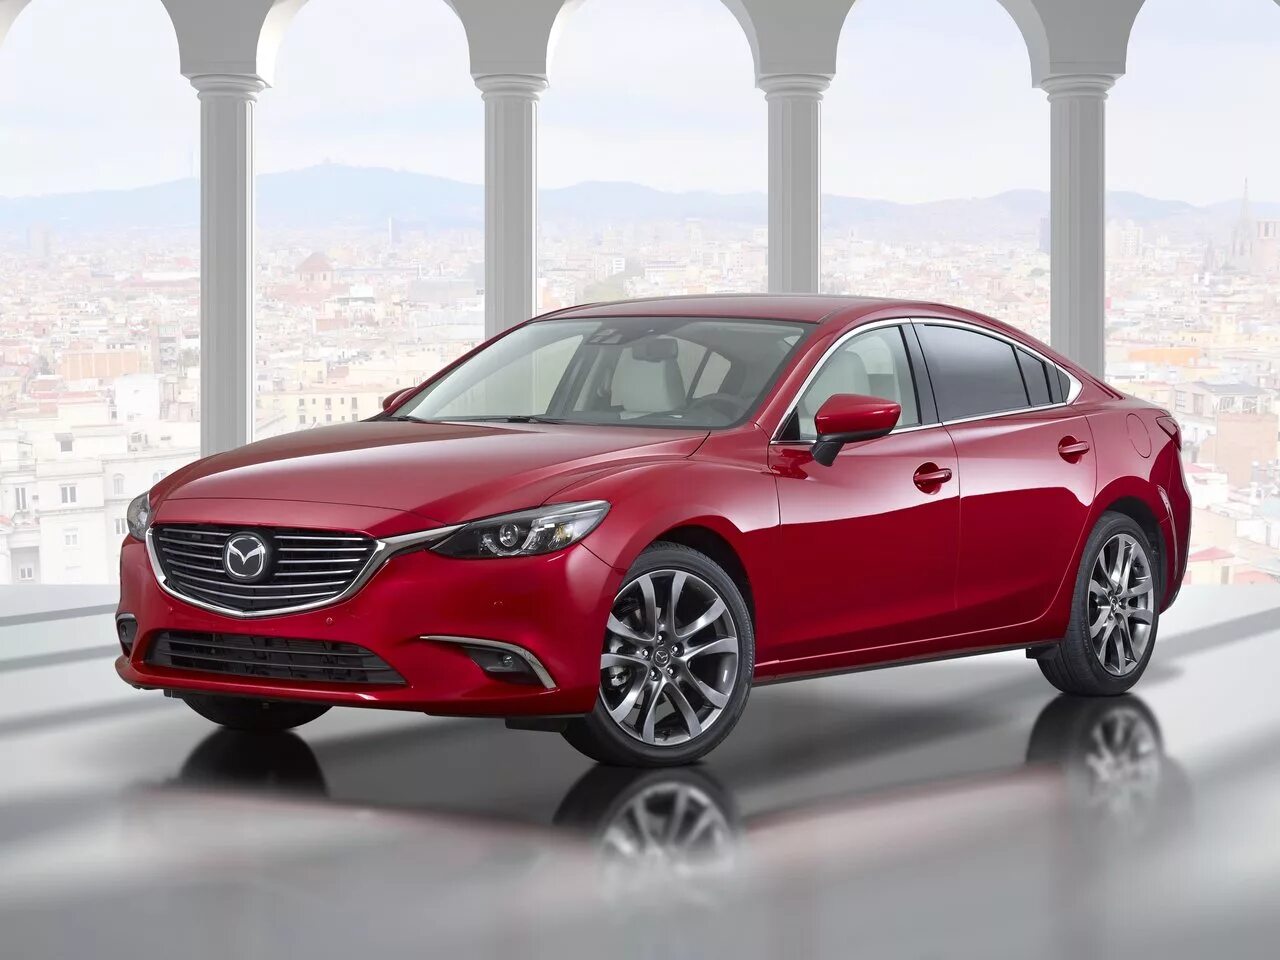 Mazda Mazda 6 2015. Мазда 6 седан 2018. Мазда 6 седан седан. Mazda 6 2015 седан.